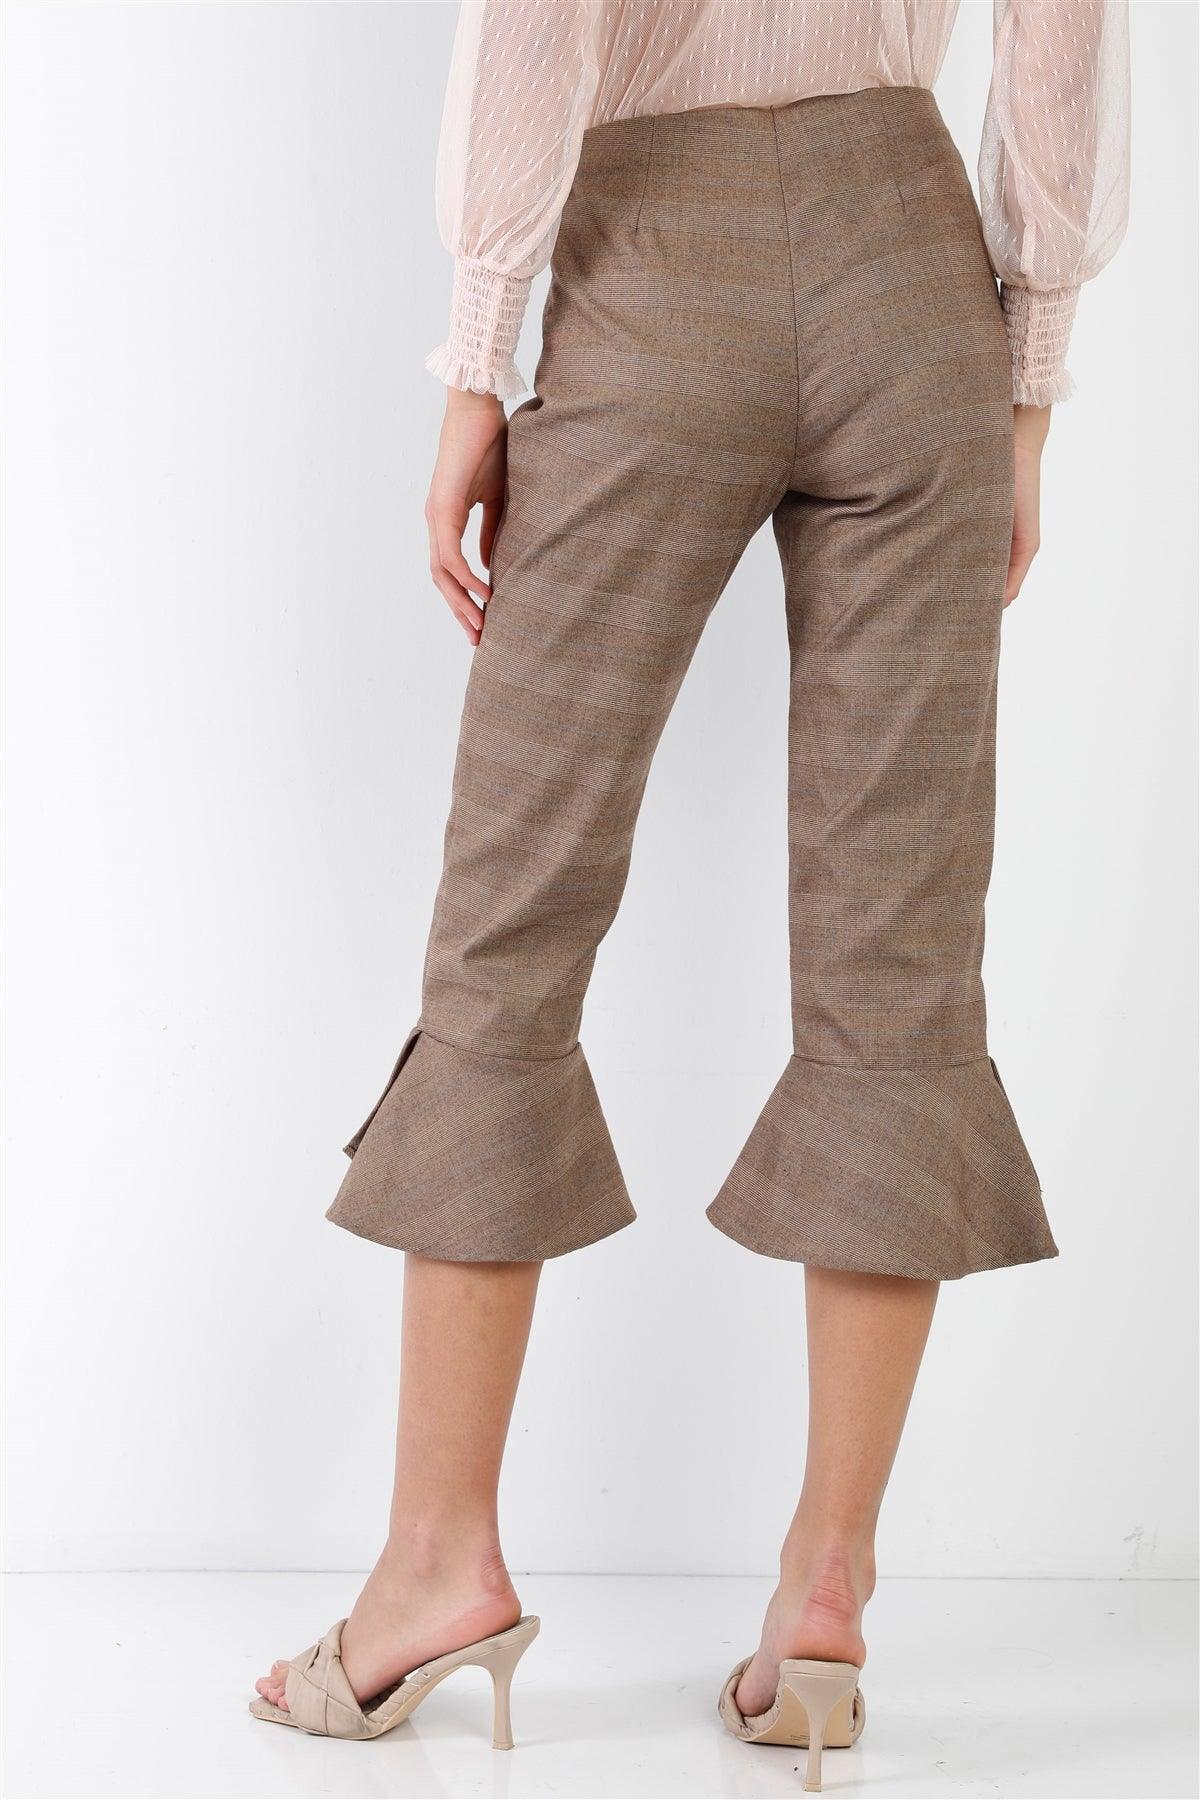 Brown Checkered High-Waisted Double Layered Ruffled Hem Capri Pants /1-2-2